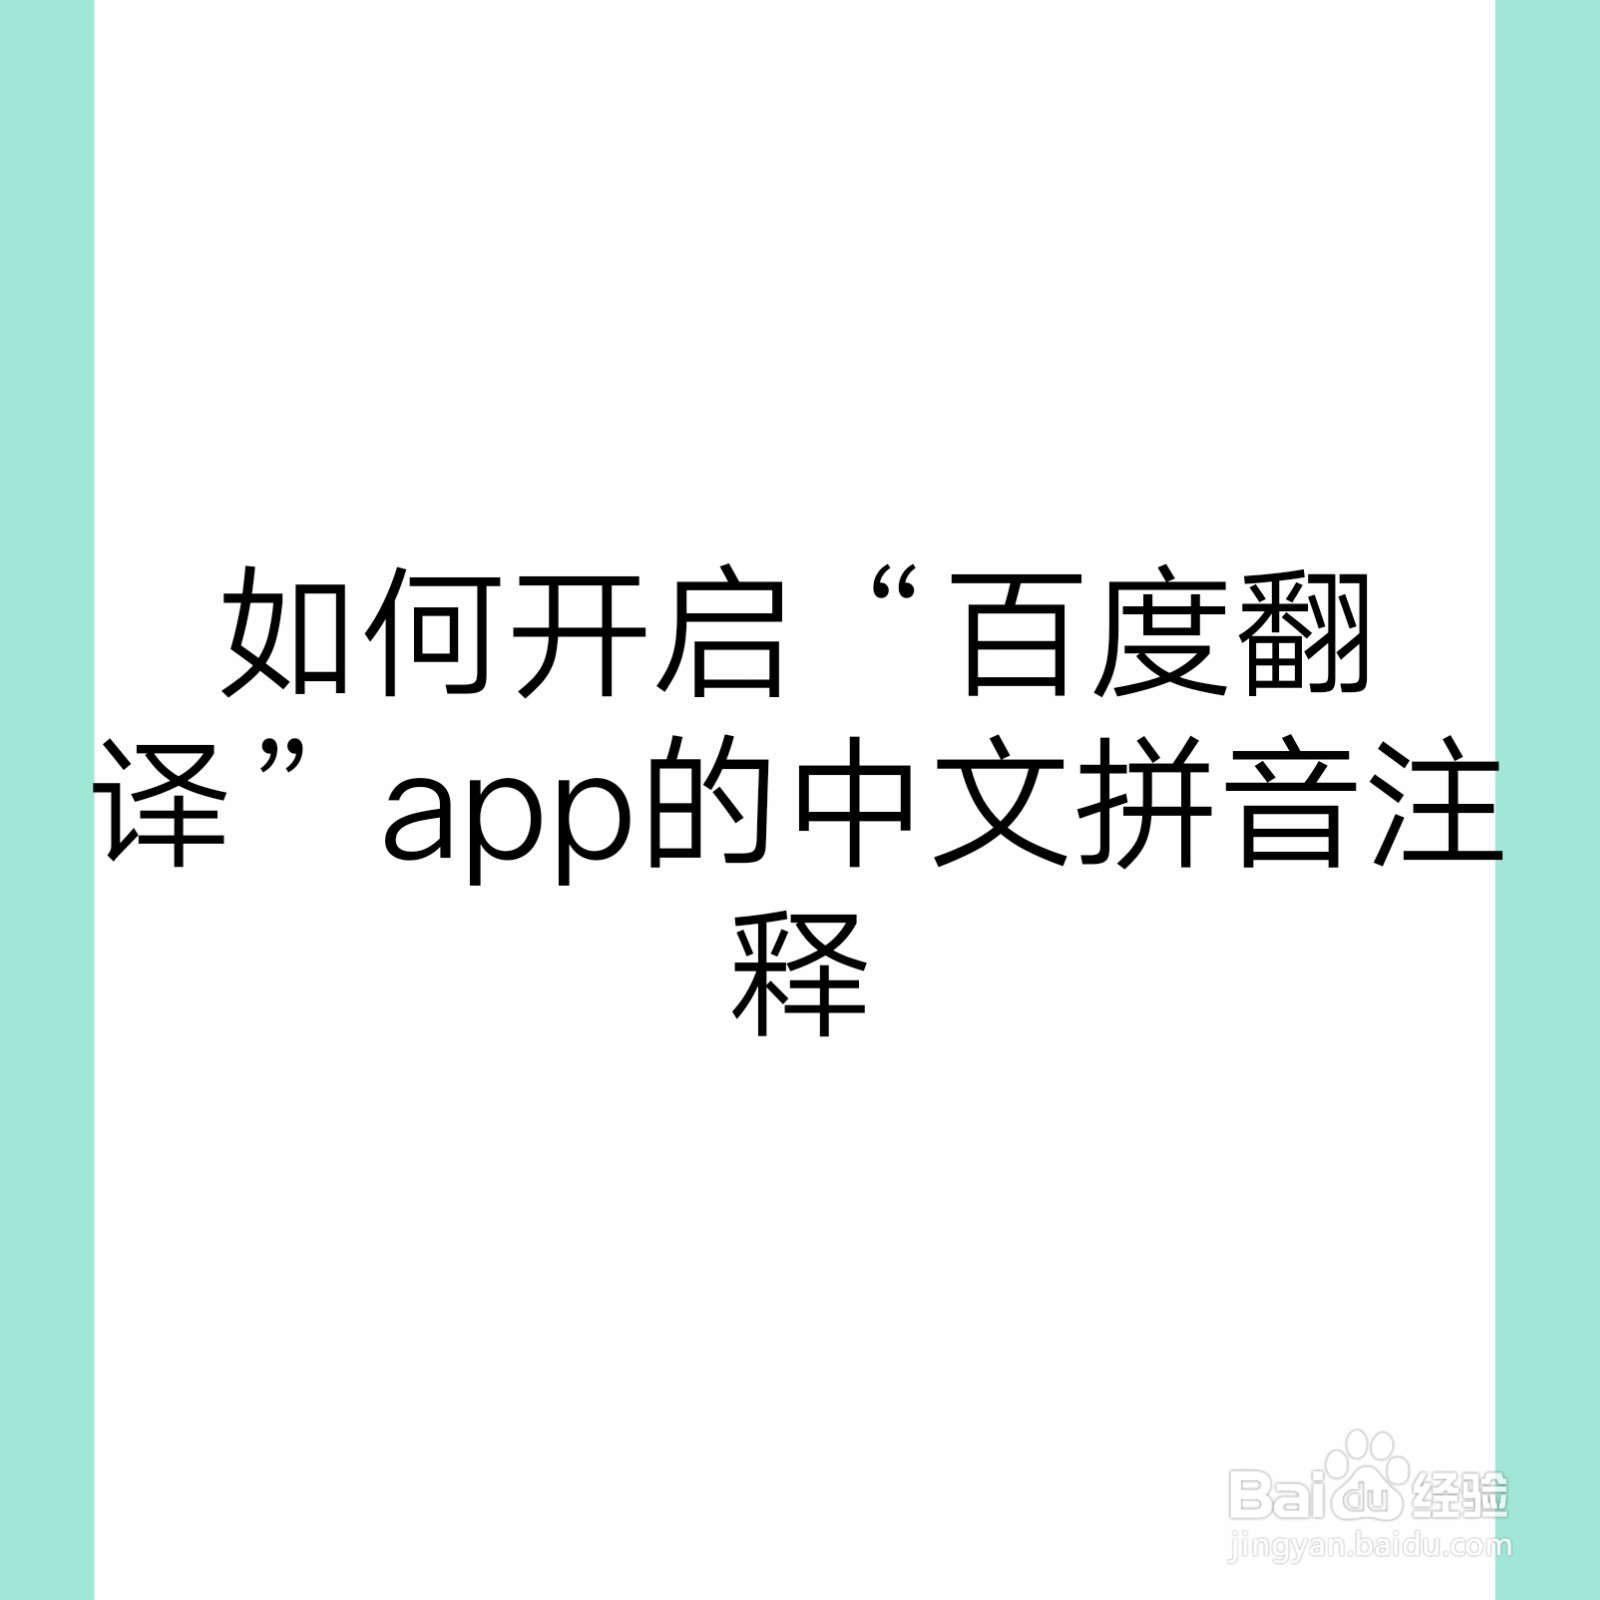 <b>如何开启“百度翻译”app的中文拼音注释</b>